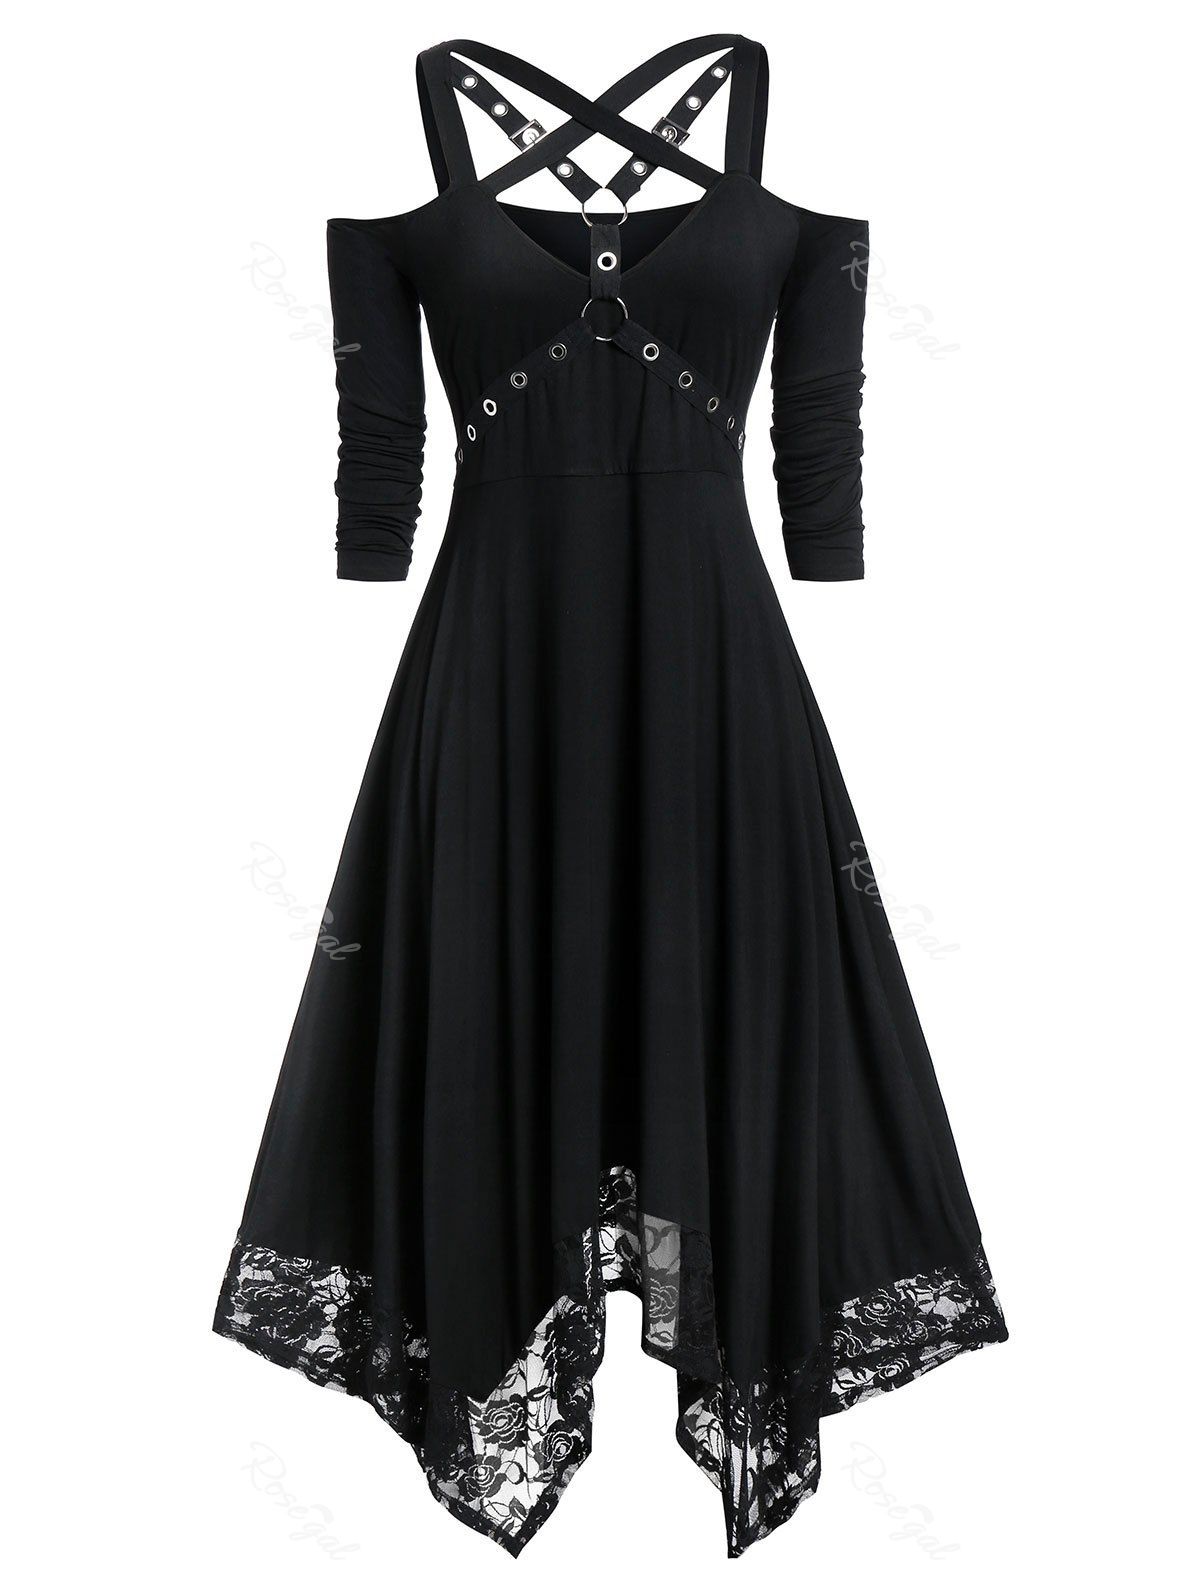 [47% OFF] Plus Size Handkerchief Open Shoulder Harness Gothic Dress ...